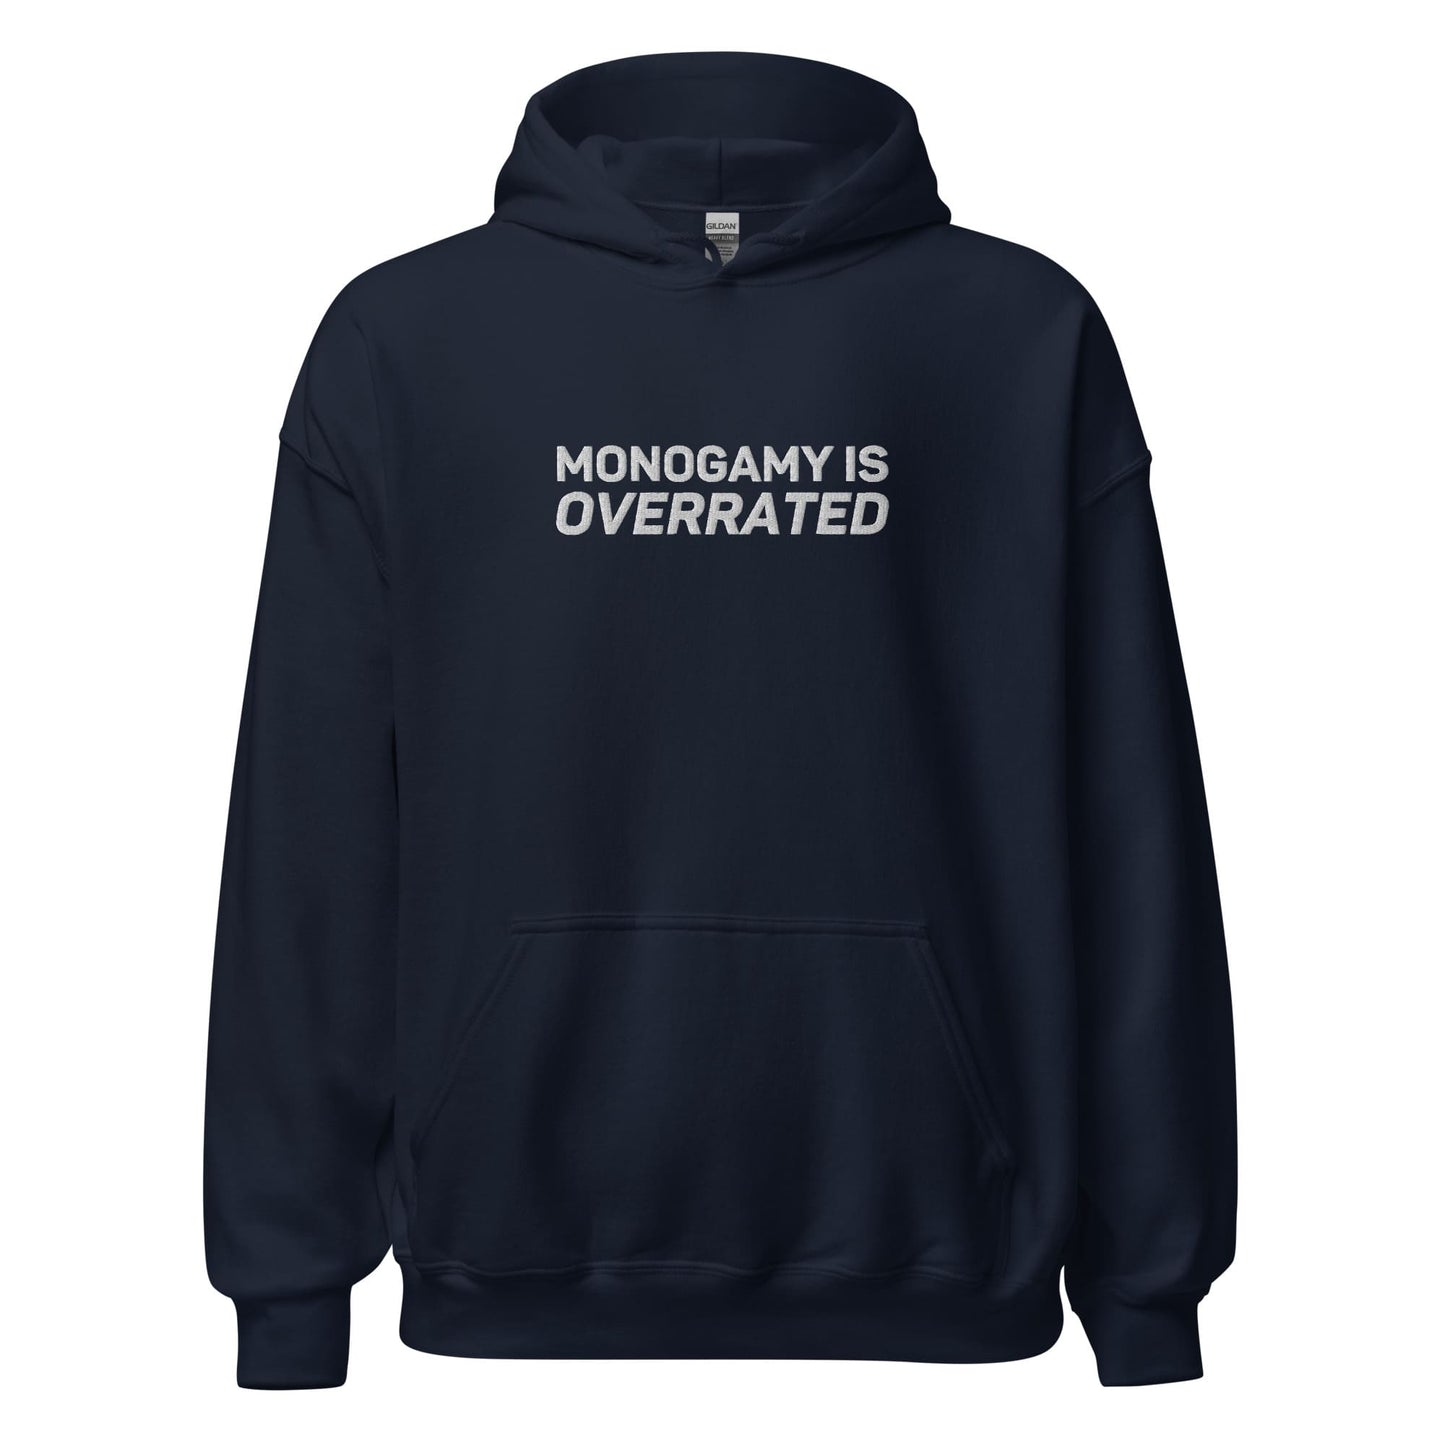 polyamory hoodie, statement polyamorous pride embroidered hooded sweatshirt, navy